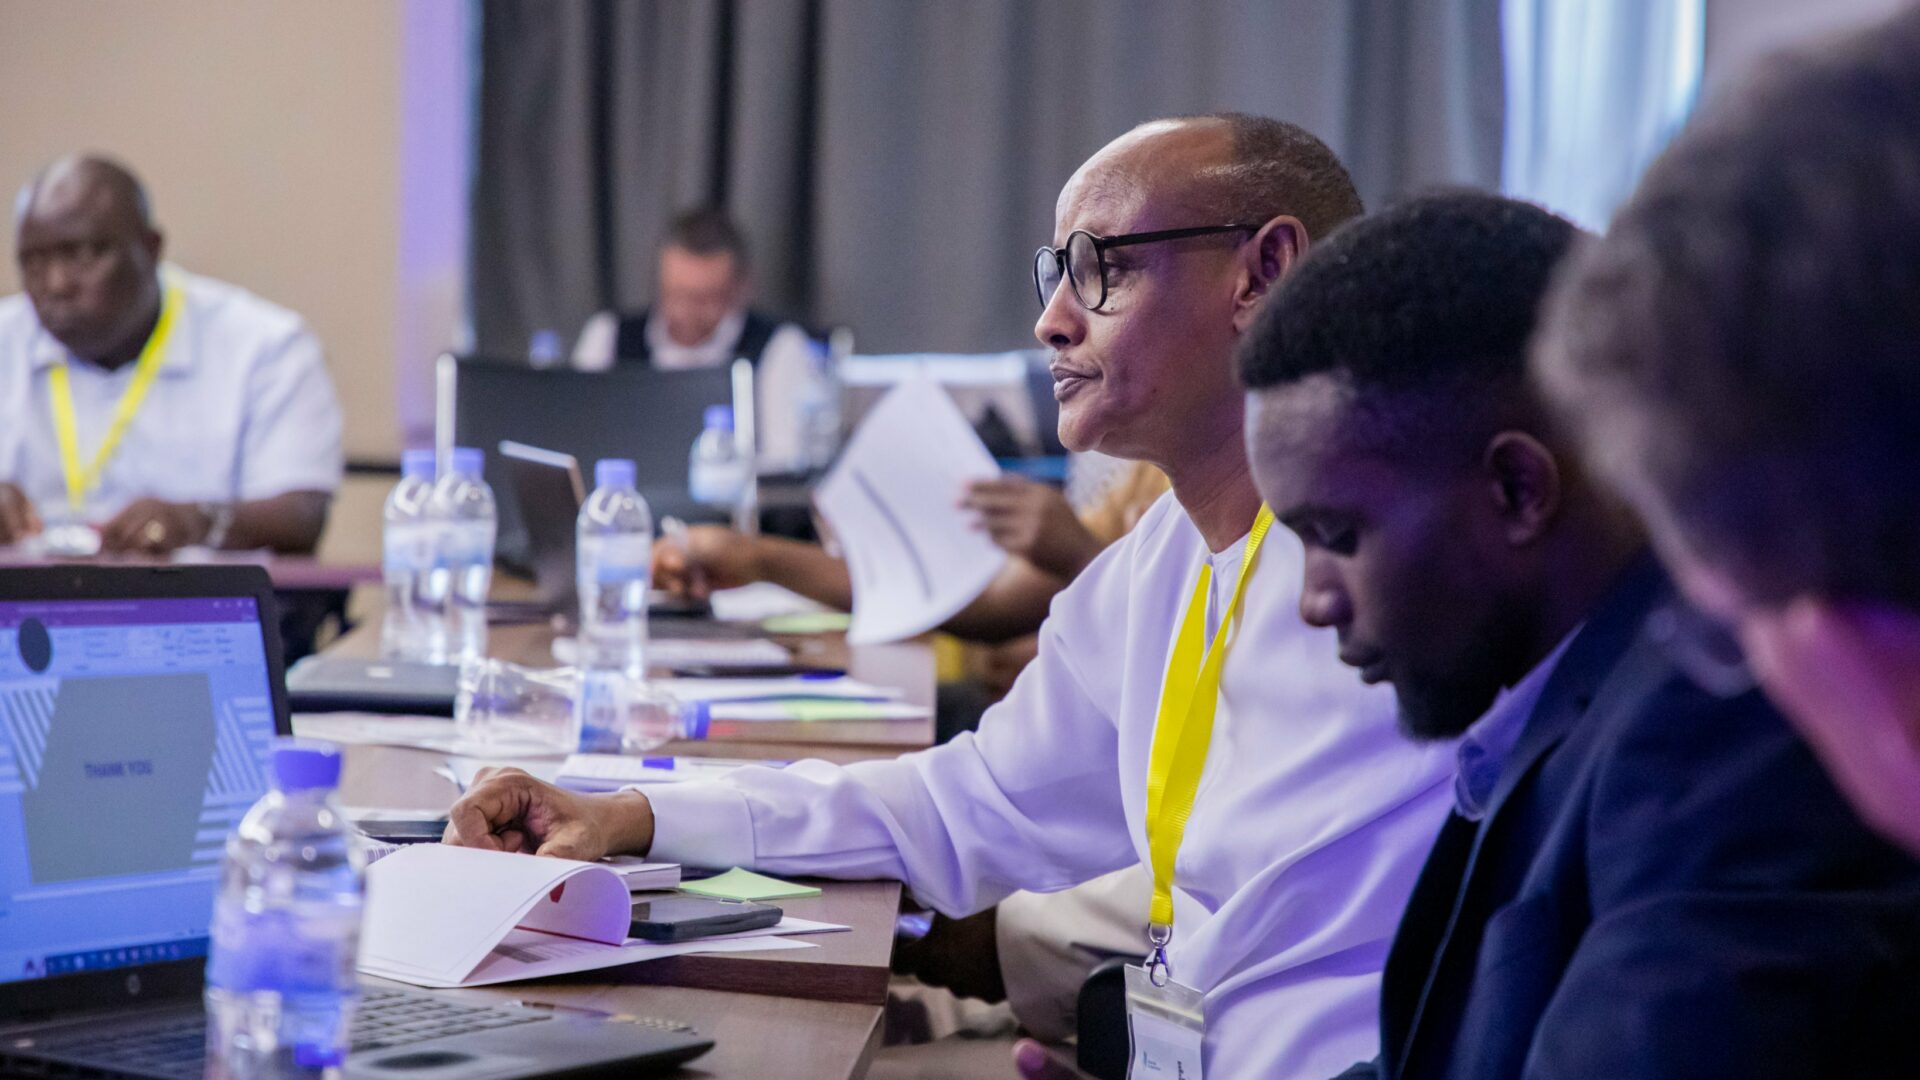 Professional man at conference in Rwanda